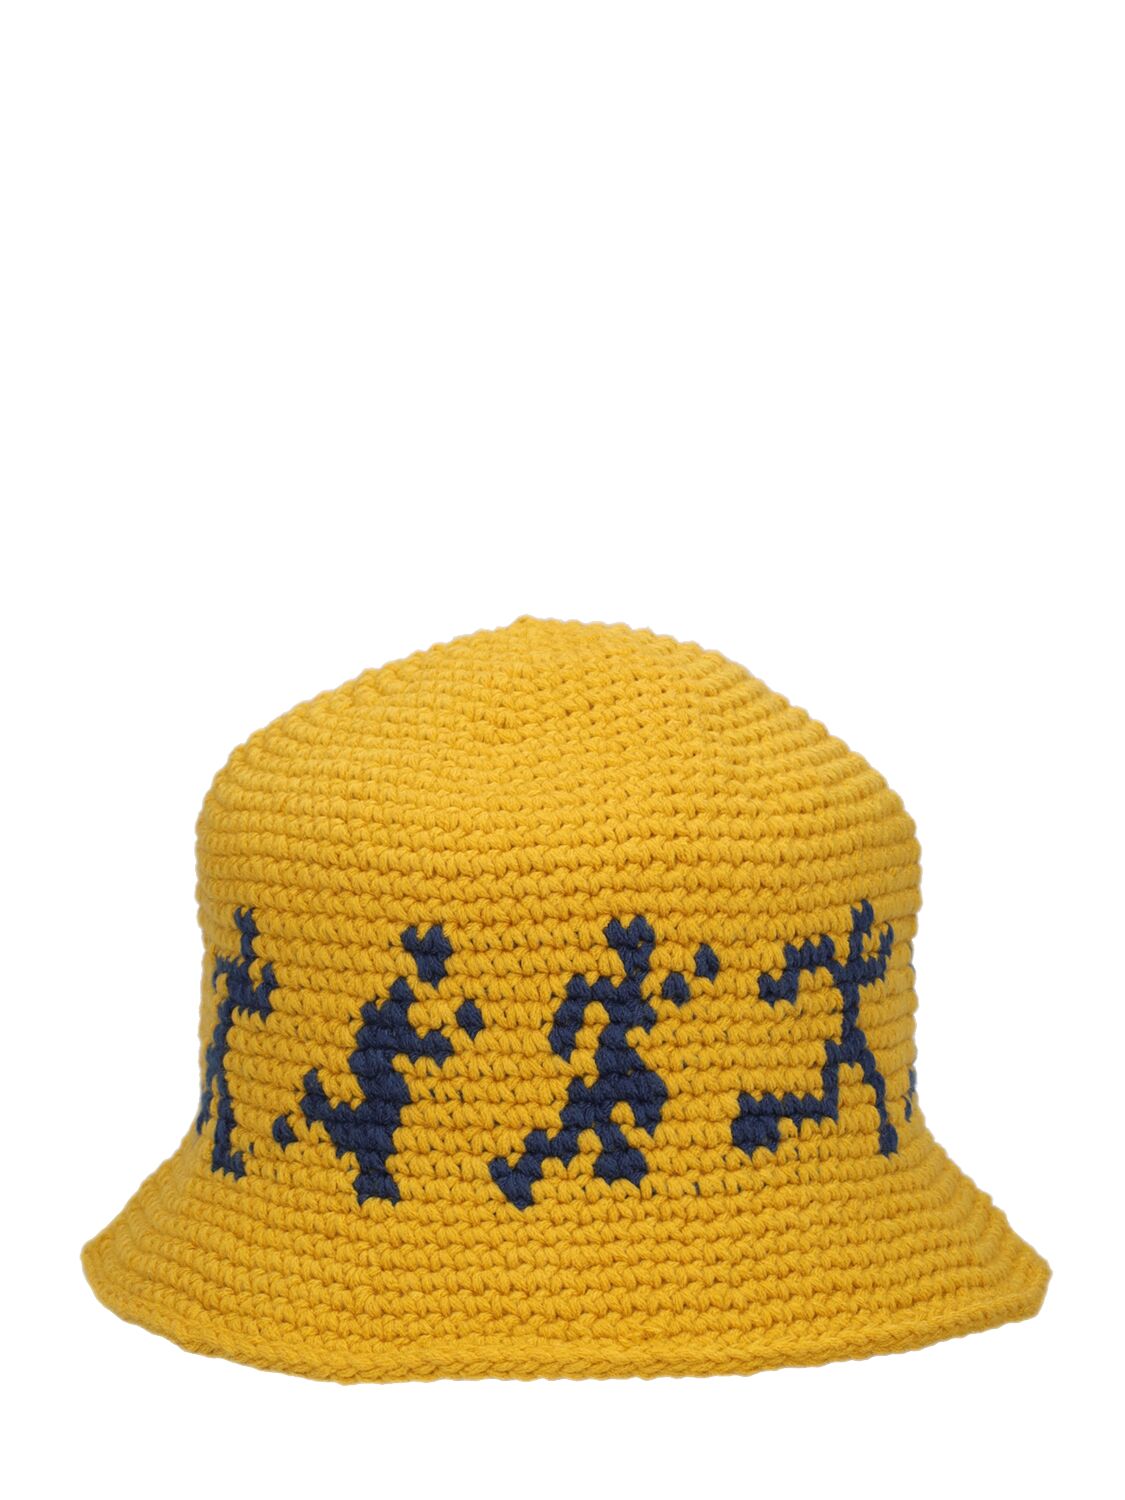 Running Guys Cotton Crochet Hat